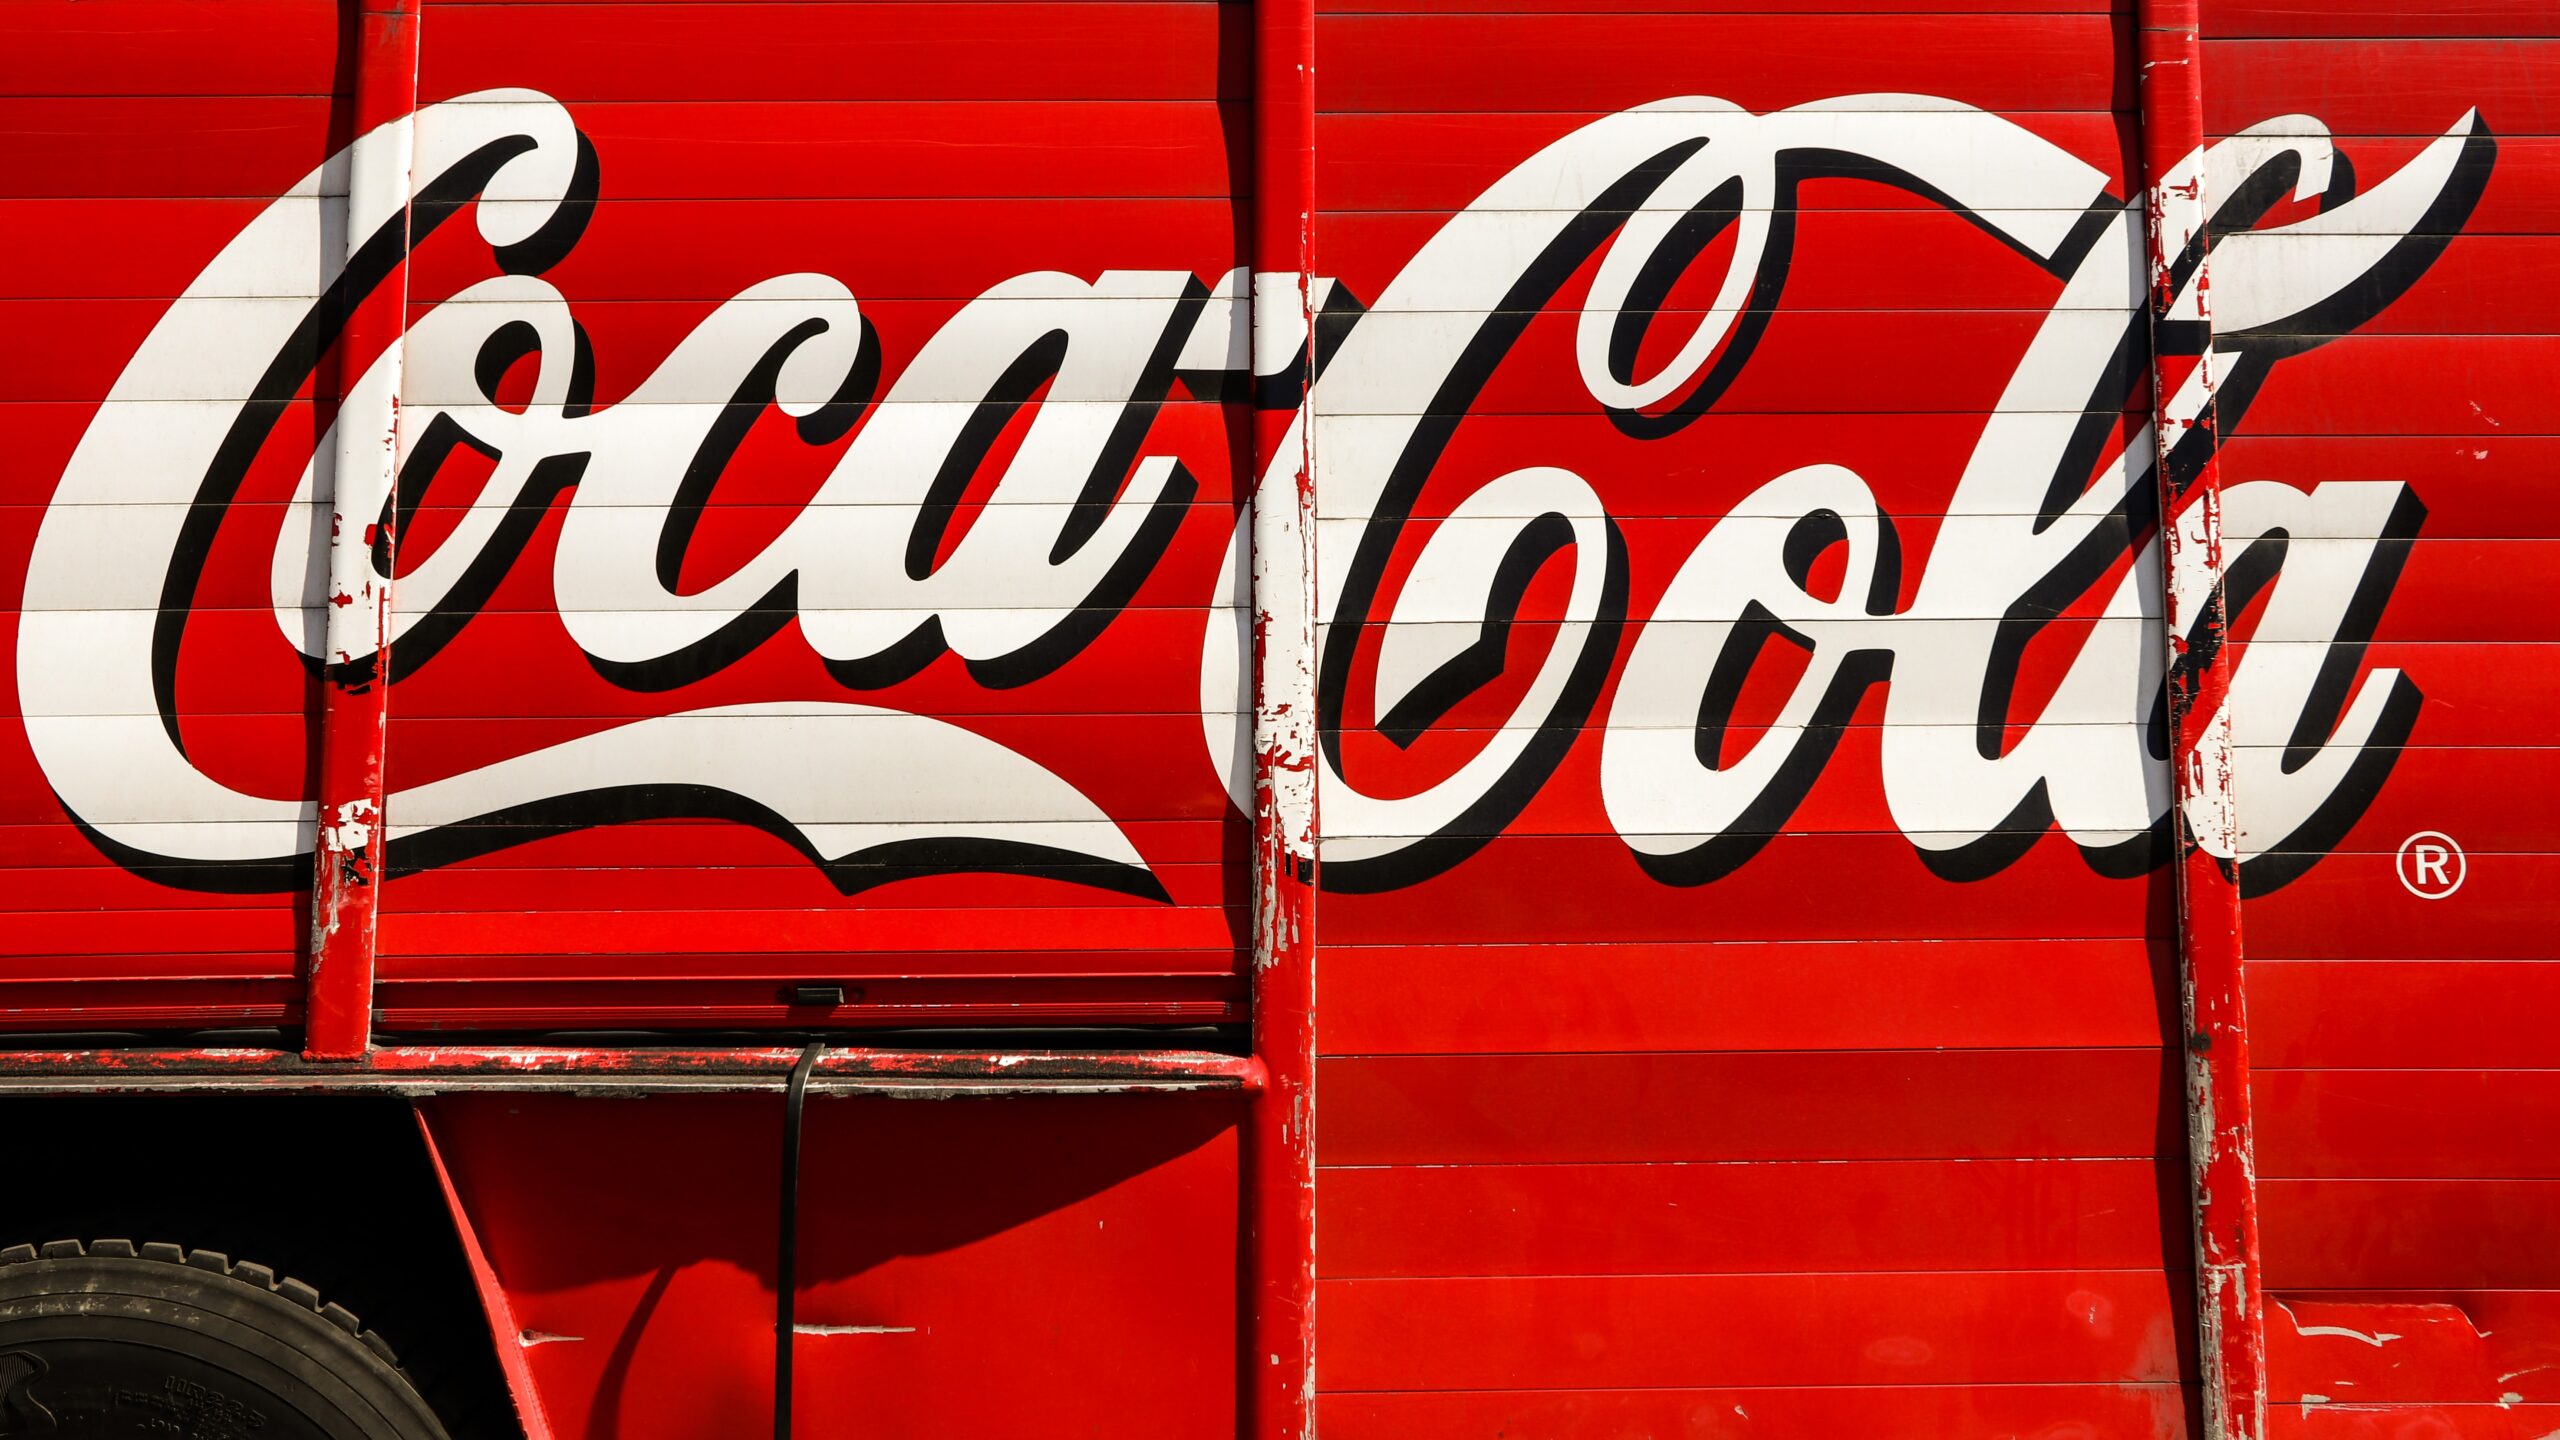 Coca-cola truck